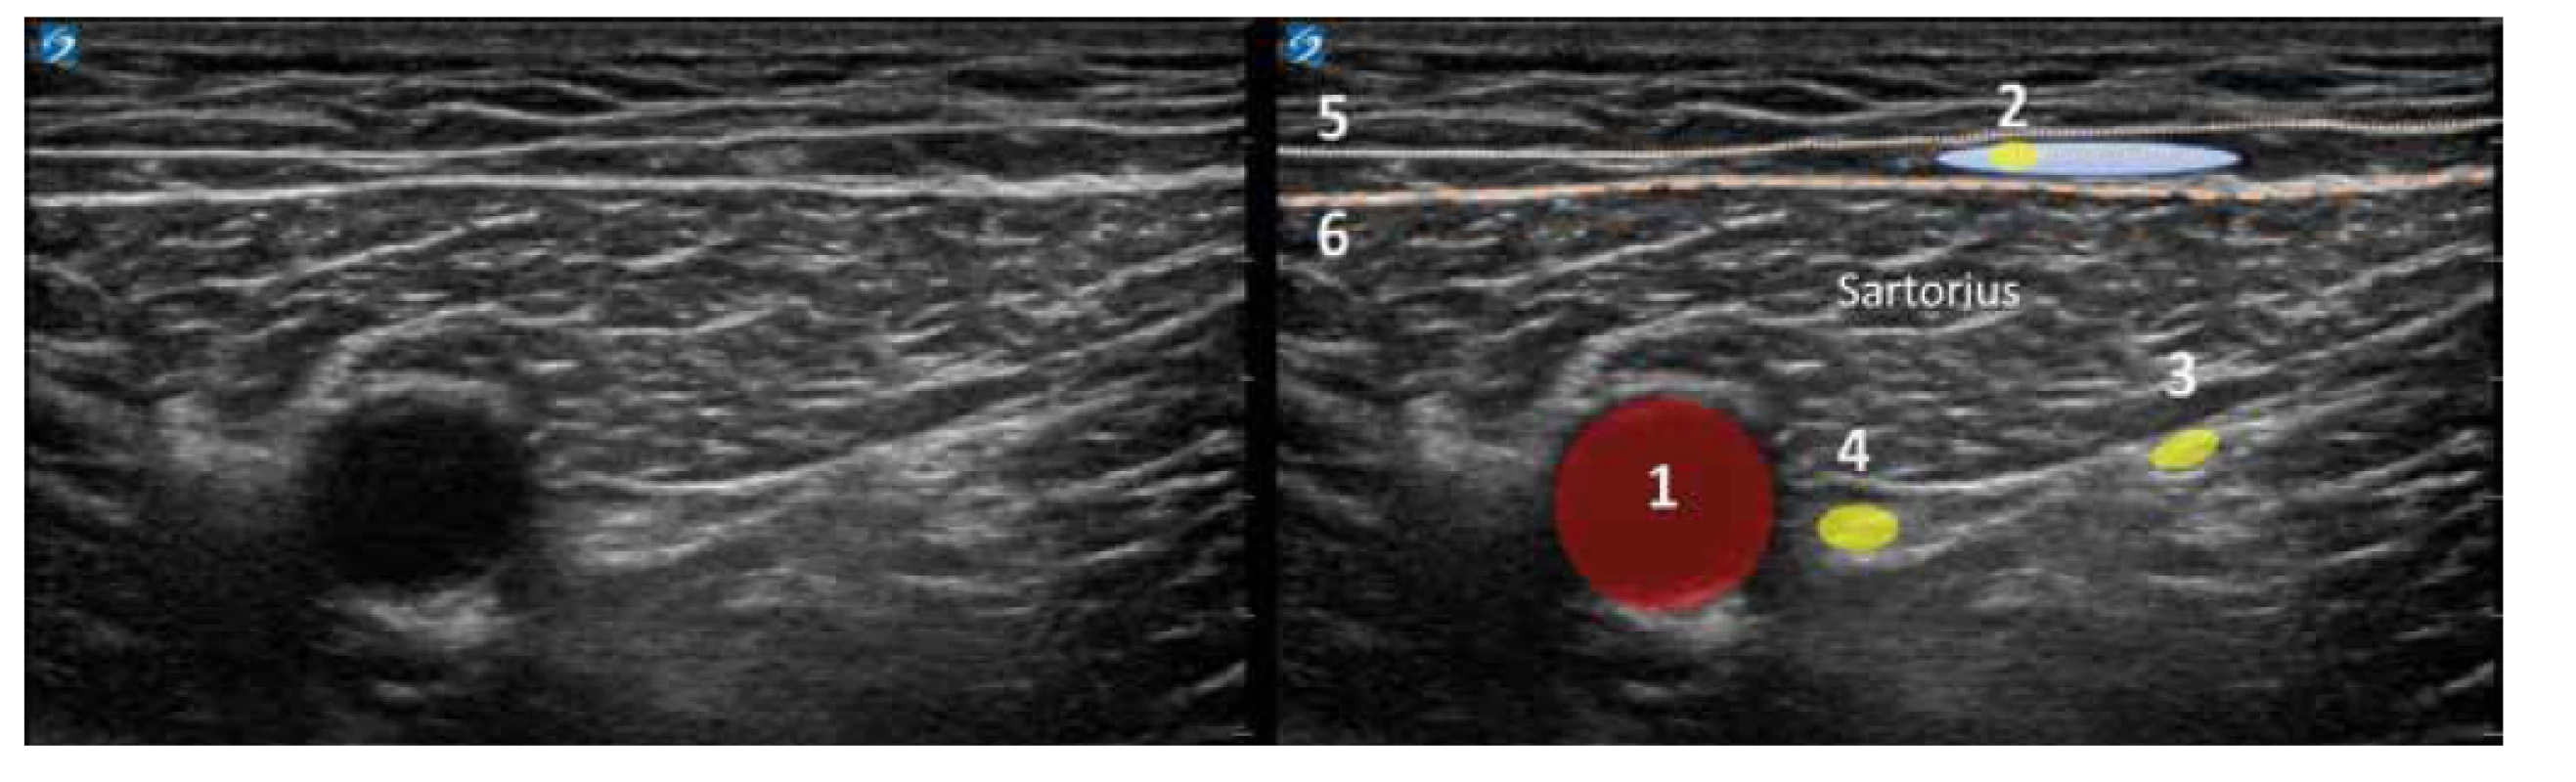 Nativní a kolorovaný ultrazvukový obraz v trigonum femorale. 1. arterie femoralis, 2. NCFIM, modrou barvou naznačeno lokální anestetikum,
3. n. vastus medialis, 4. nervus femoralis, 5. povrchní fascie stehna, 6. fascia lata